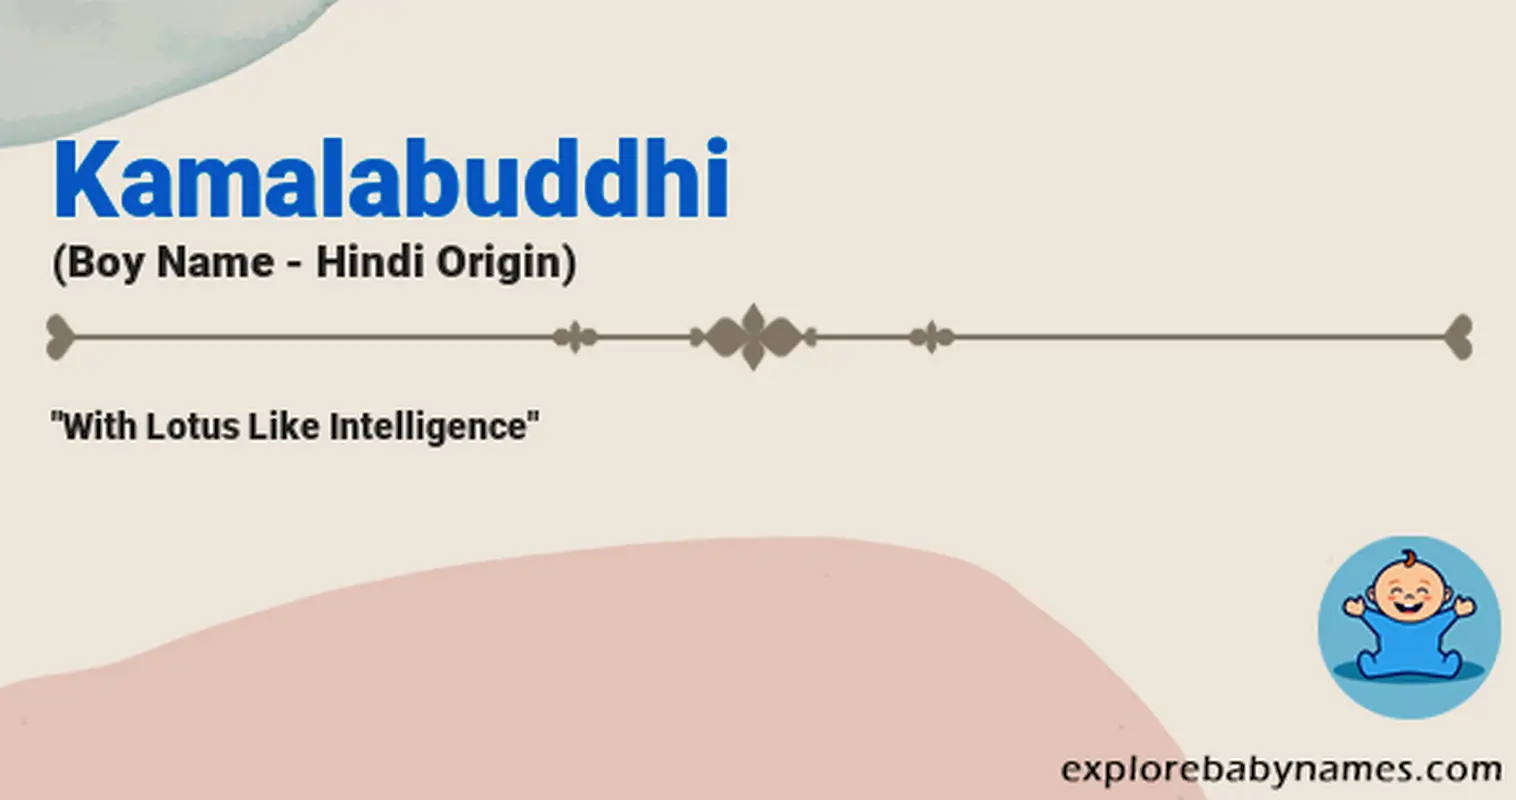 Meaning of Kamalabuddhi